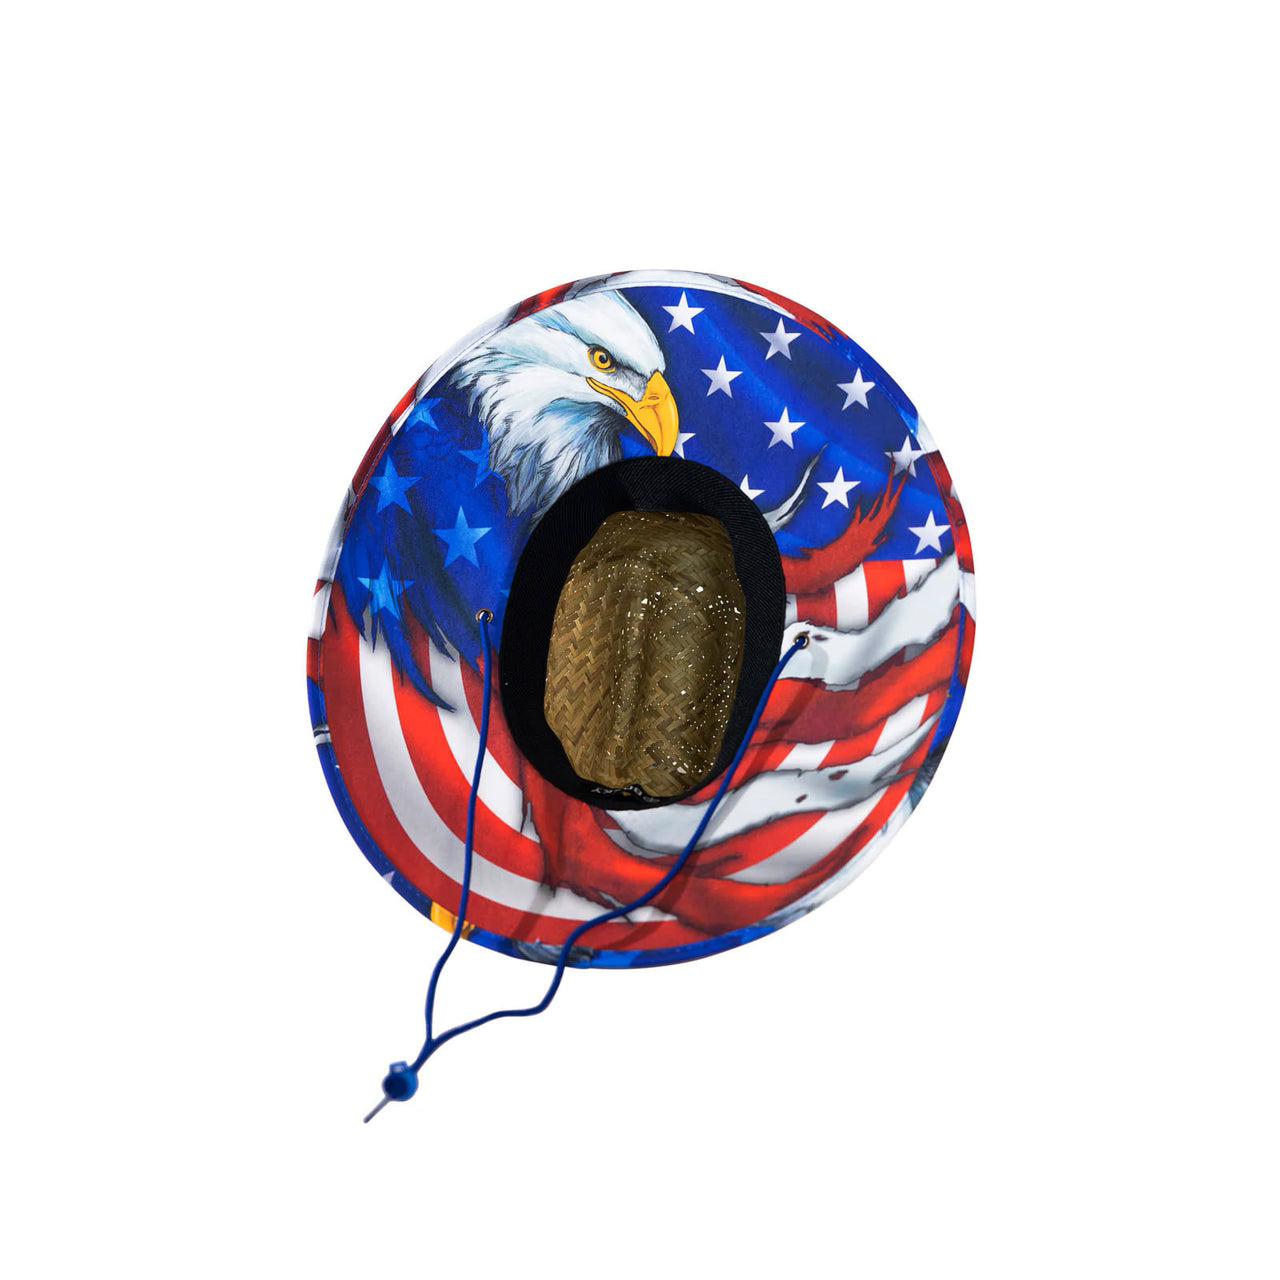 Patriot Bald Eagle Straw Hat